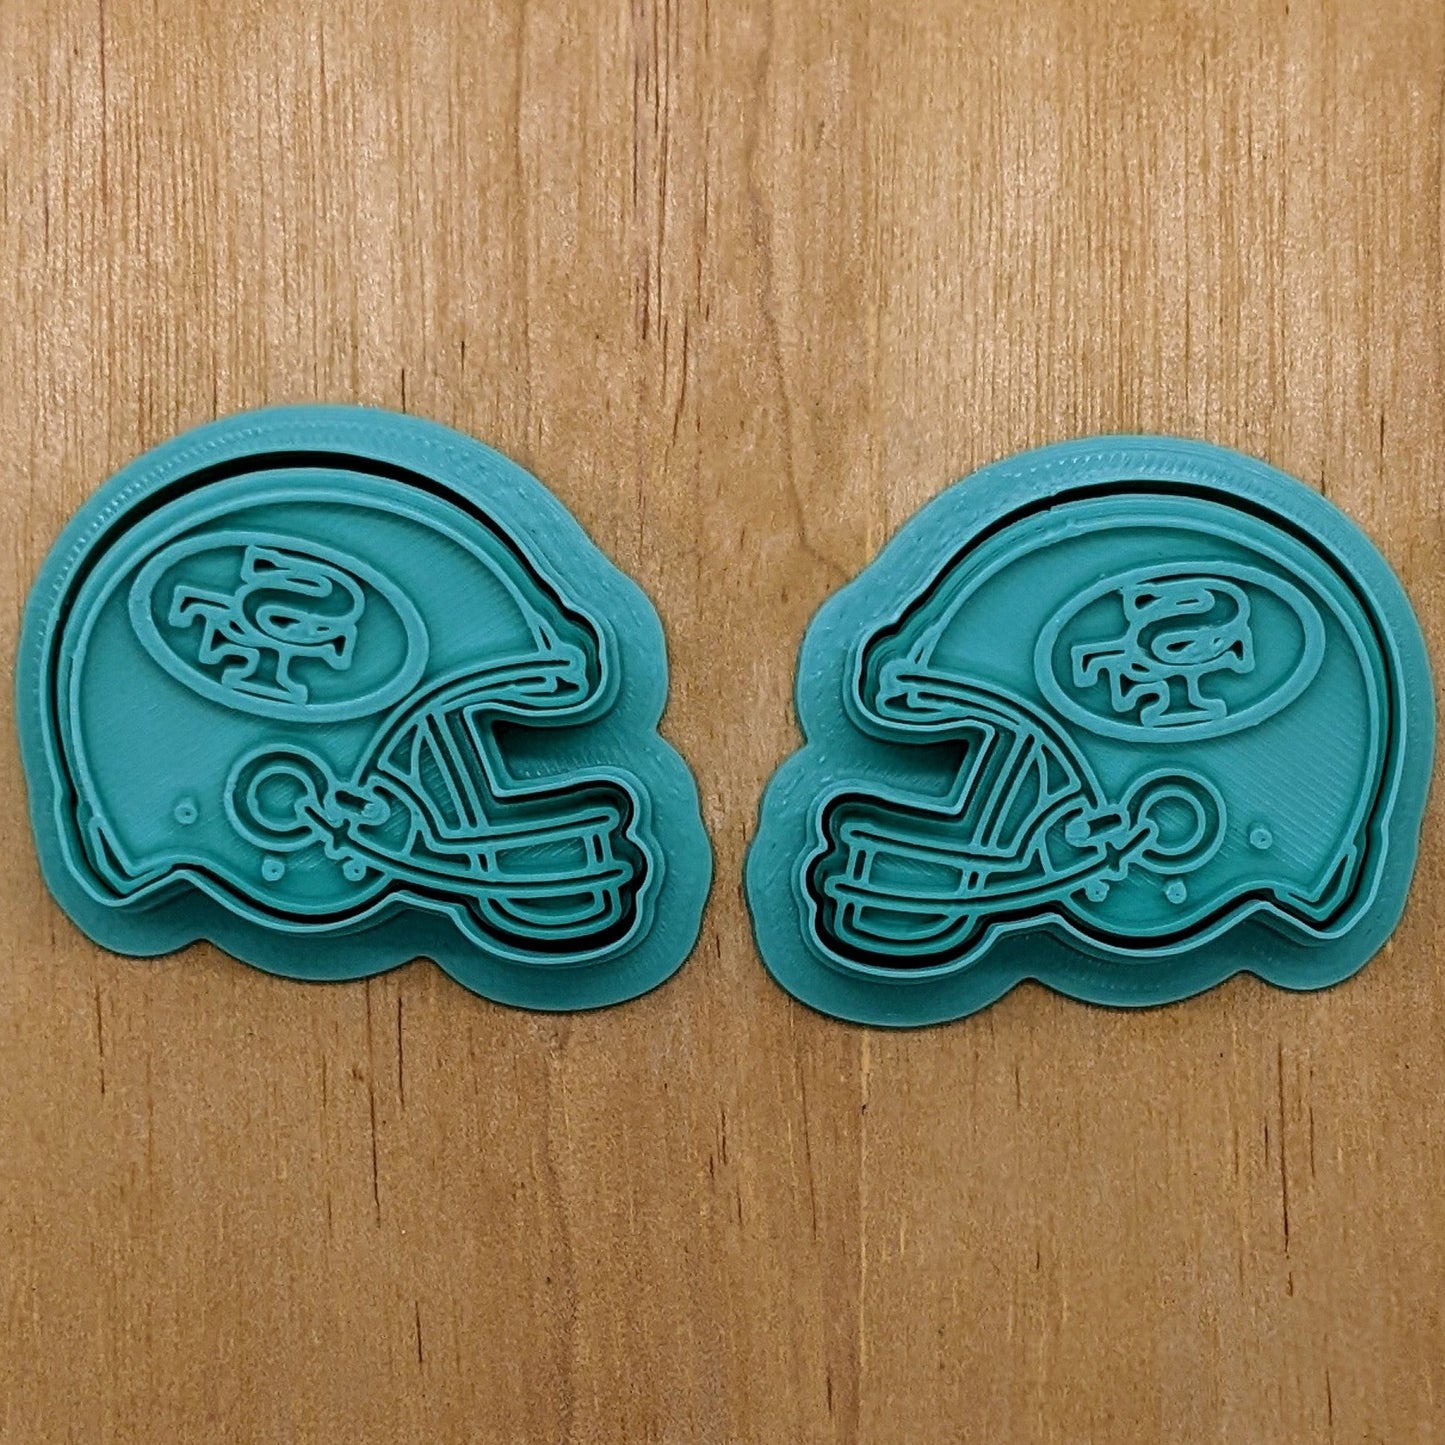 San Francisco 49ers Football Helmet Cookie Cutter & Stamp Set